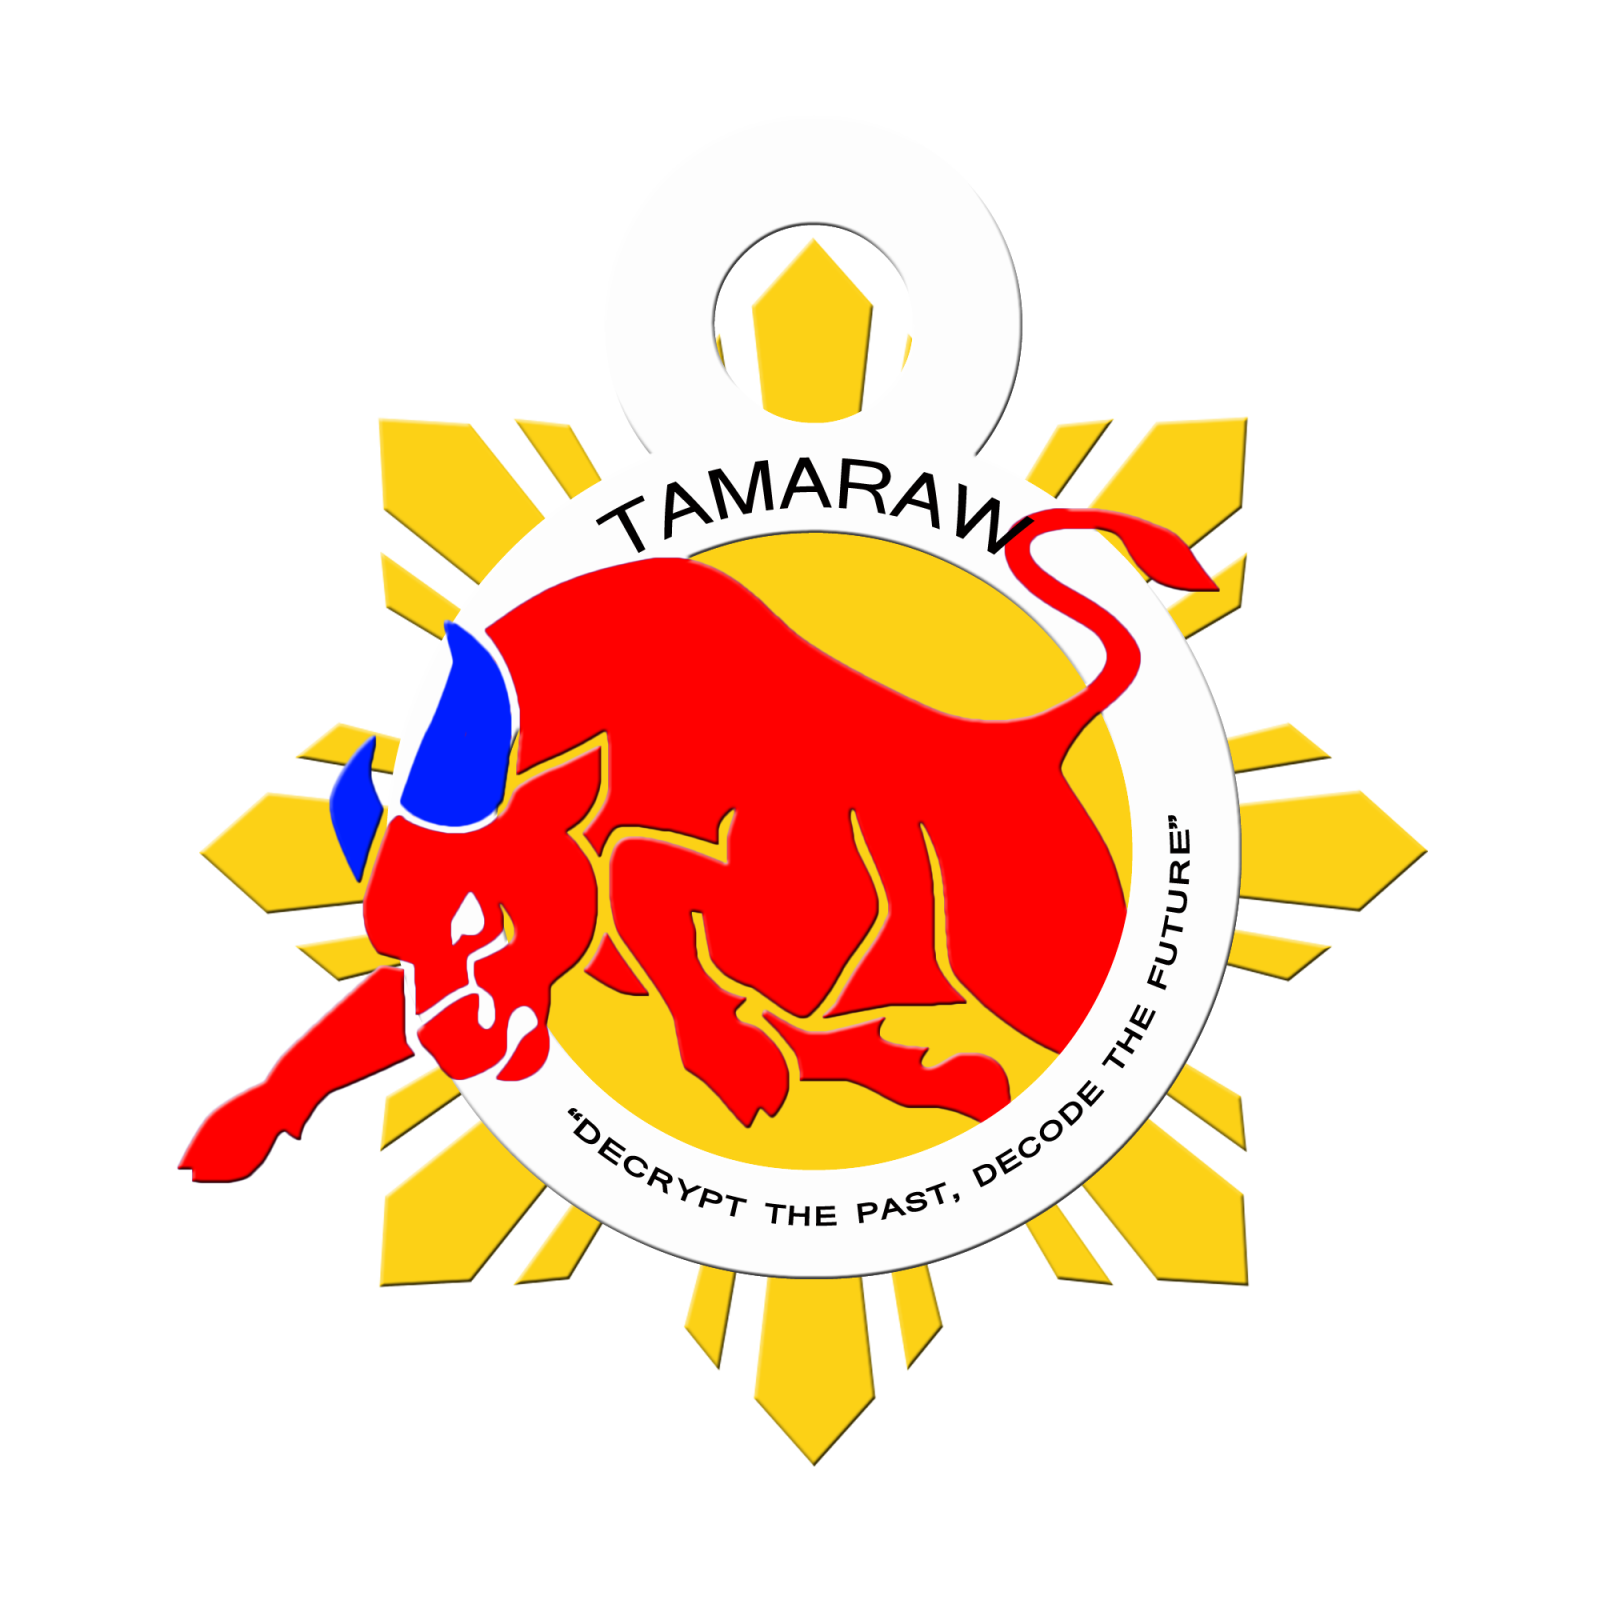 TAMARAW8